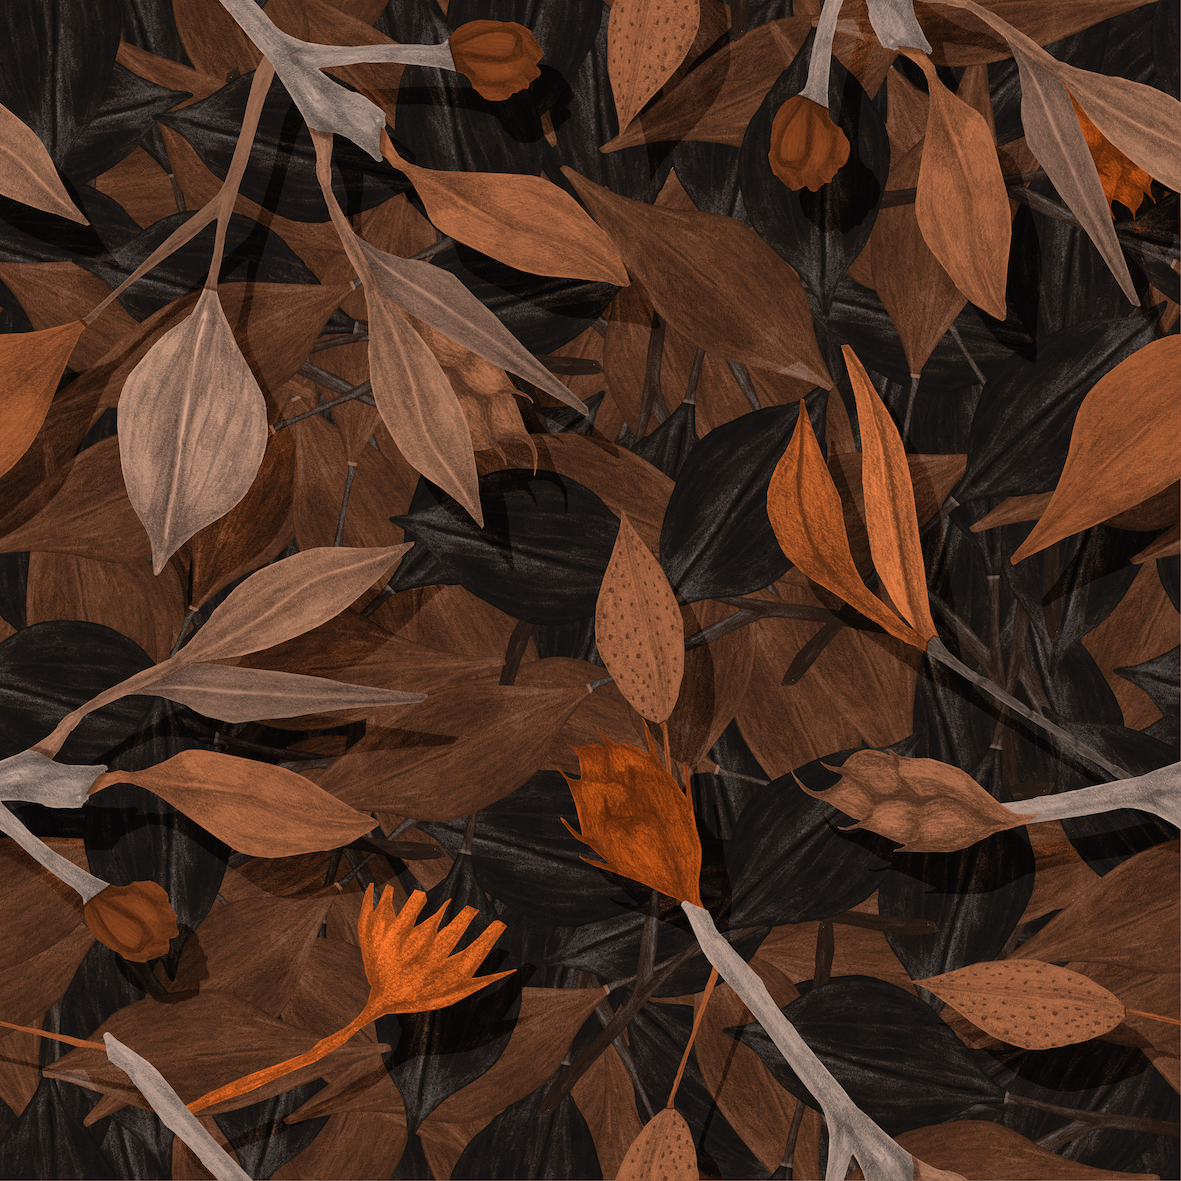 Pile of leaves 2